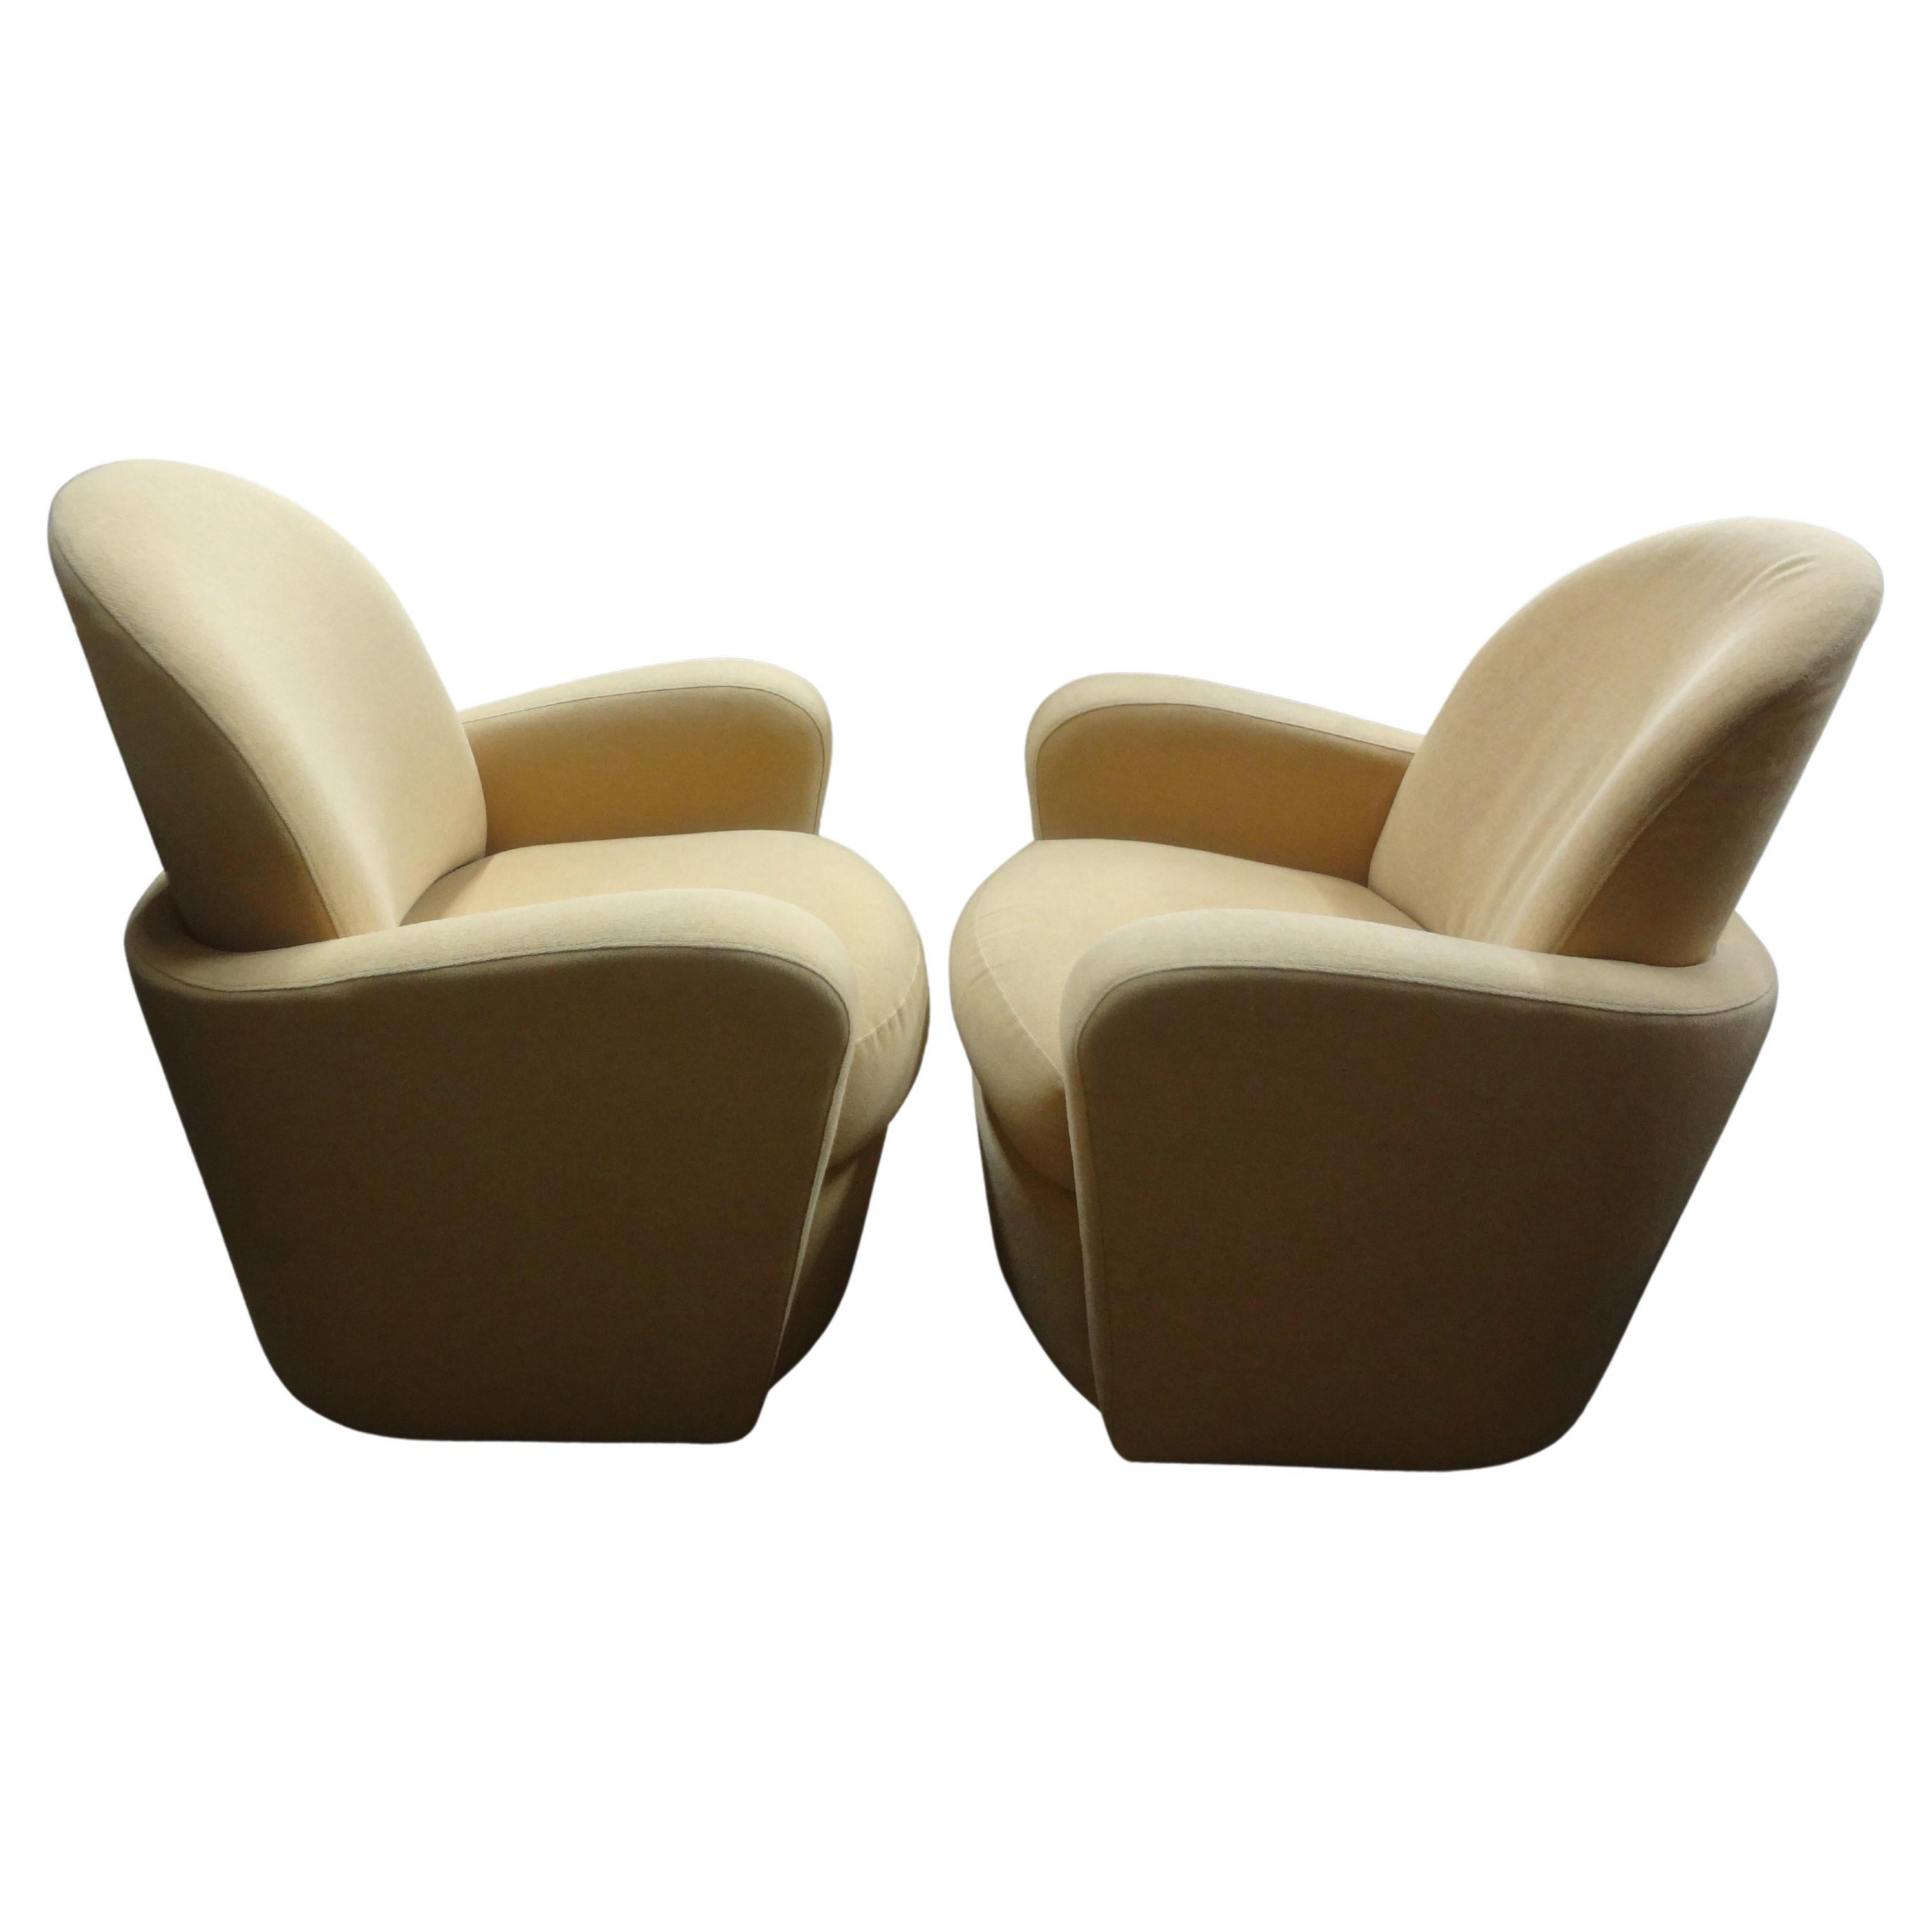 1980s Lounge Chairs